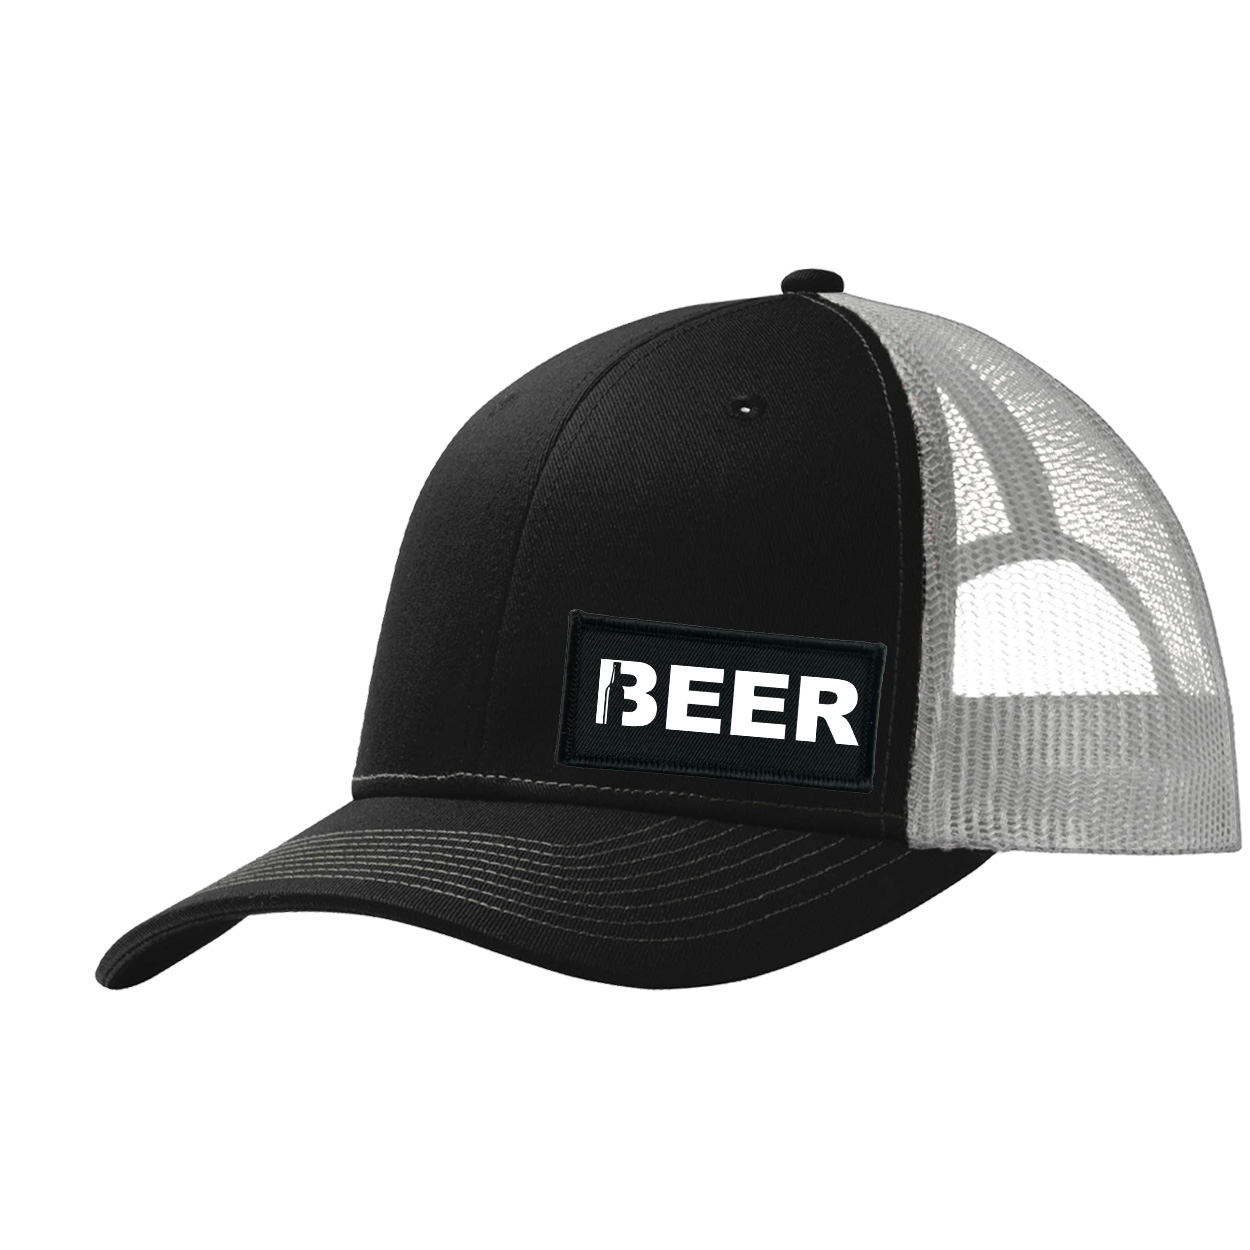 Beer Bottle Logo Night Out Woven Patch Snapback Trucker Hat Black/Gray